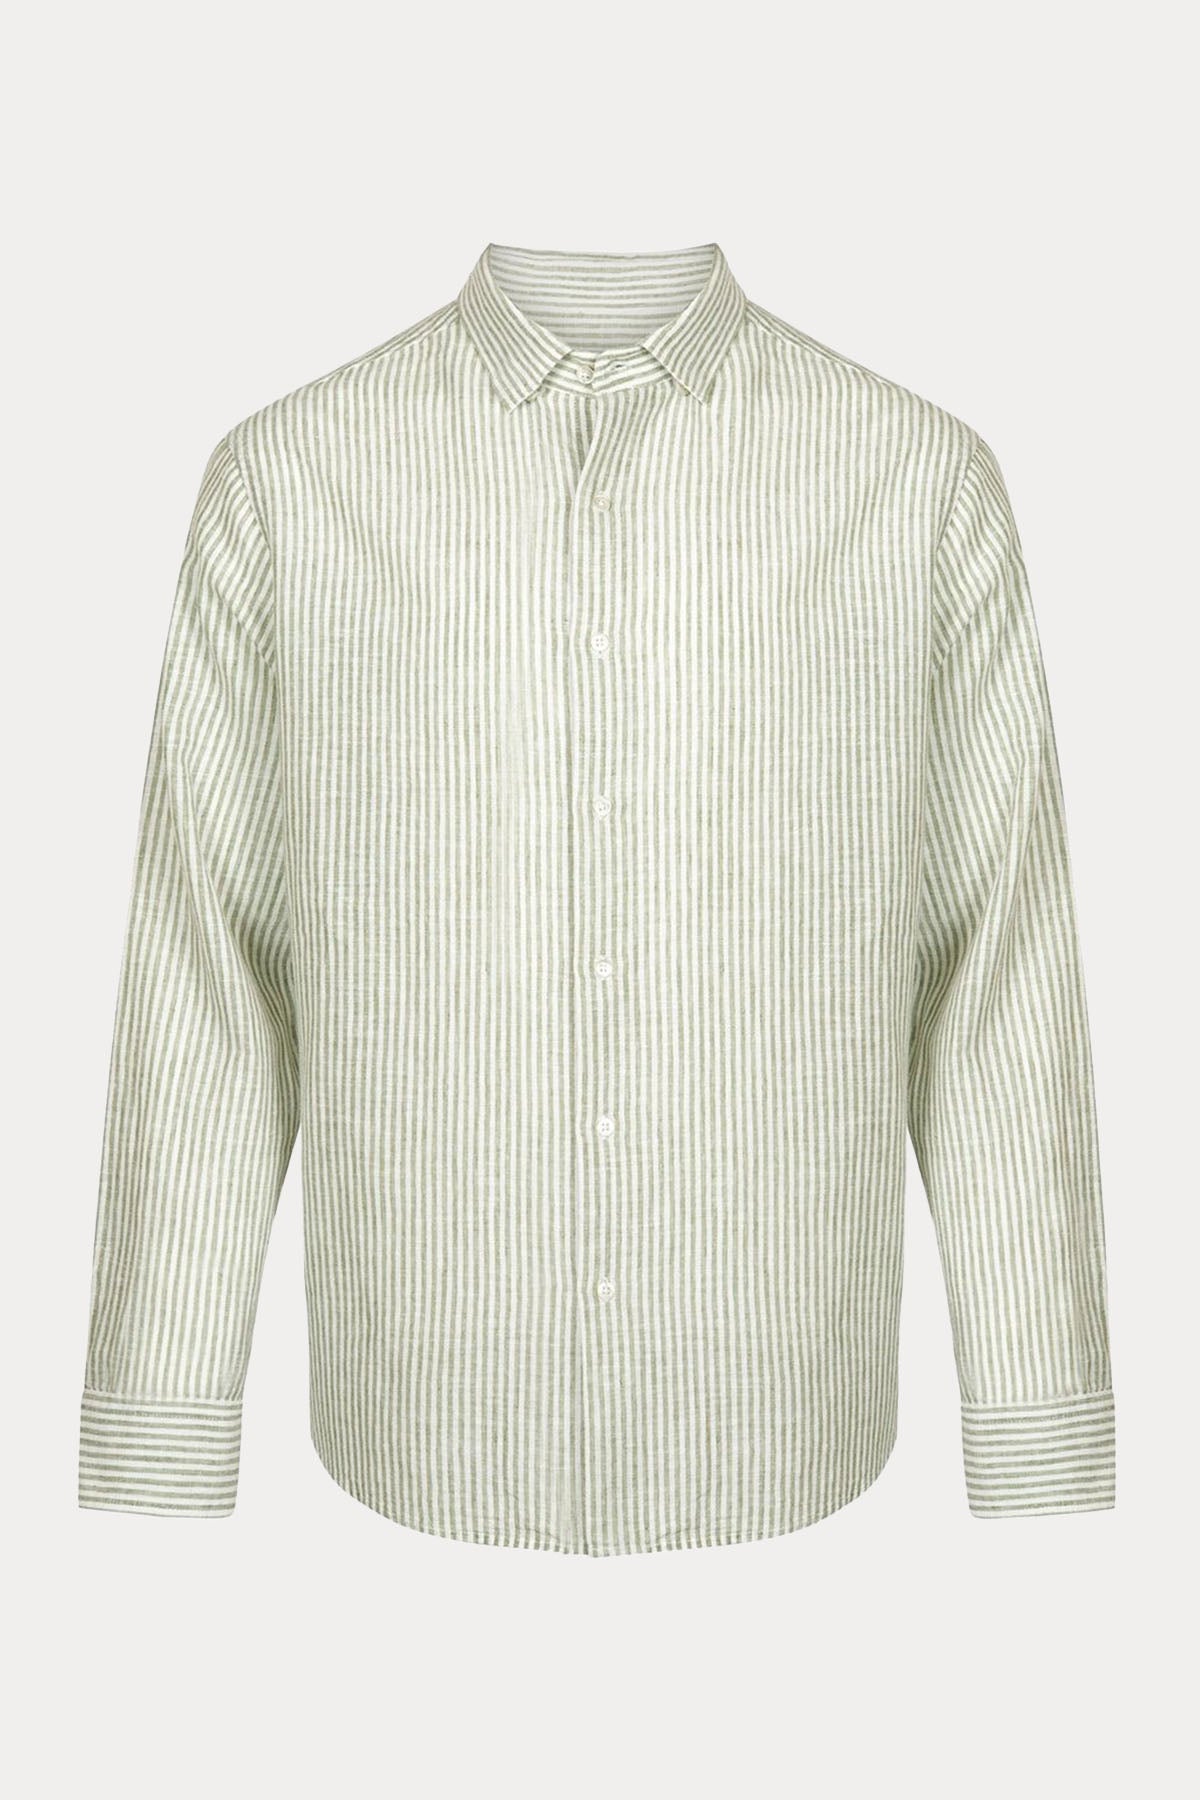 Bluemint Luca Stripey Custom Fit Keten Karışımlı Çizgili Gömlek-Libas Trendy Fashion Store